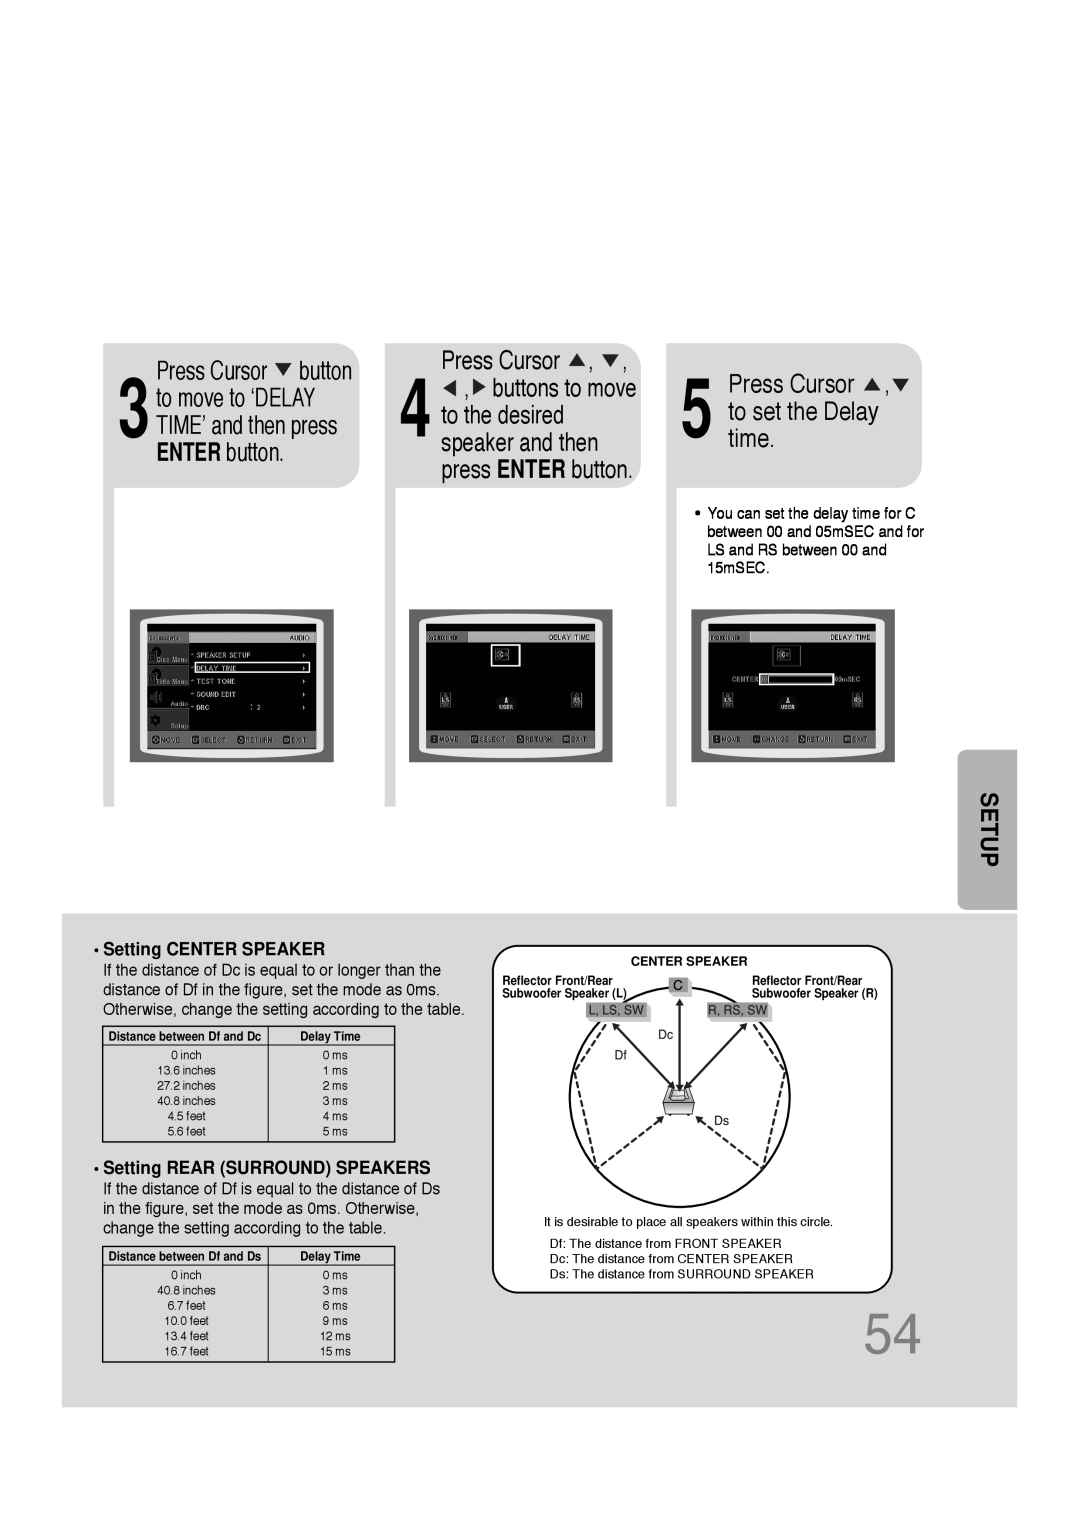 Samsung 20051111103302296 Press Cursor button, Setup, Press Cursor ,5 totime.set the Delay, •Setting CENTER SPEAKER 